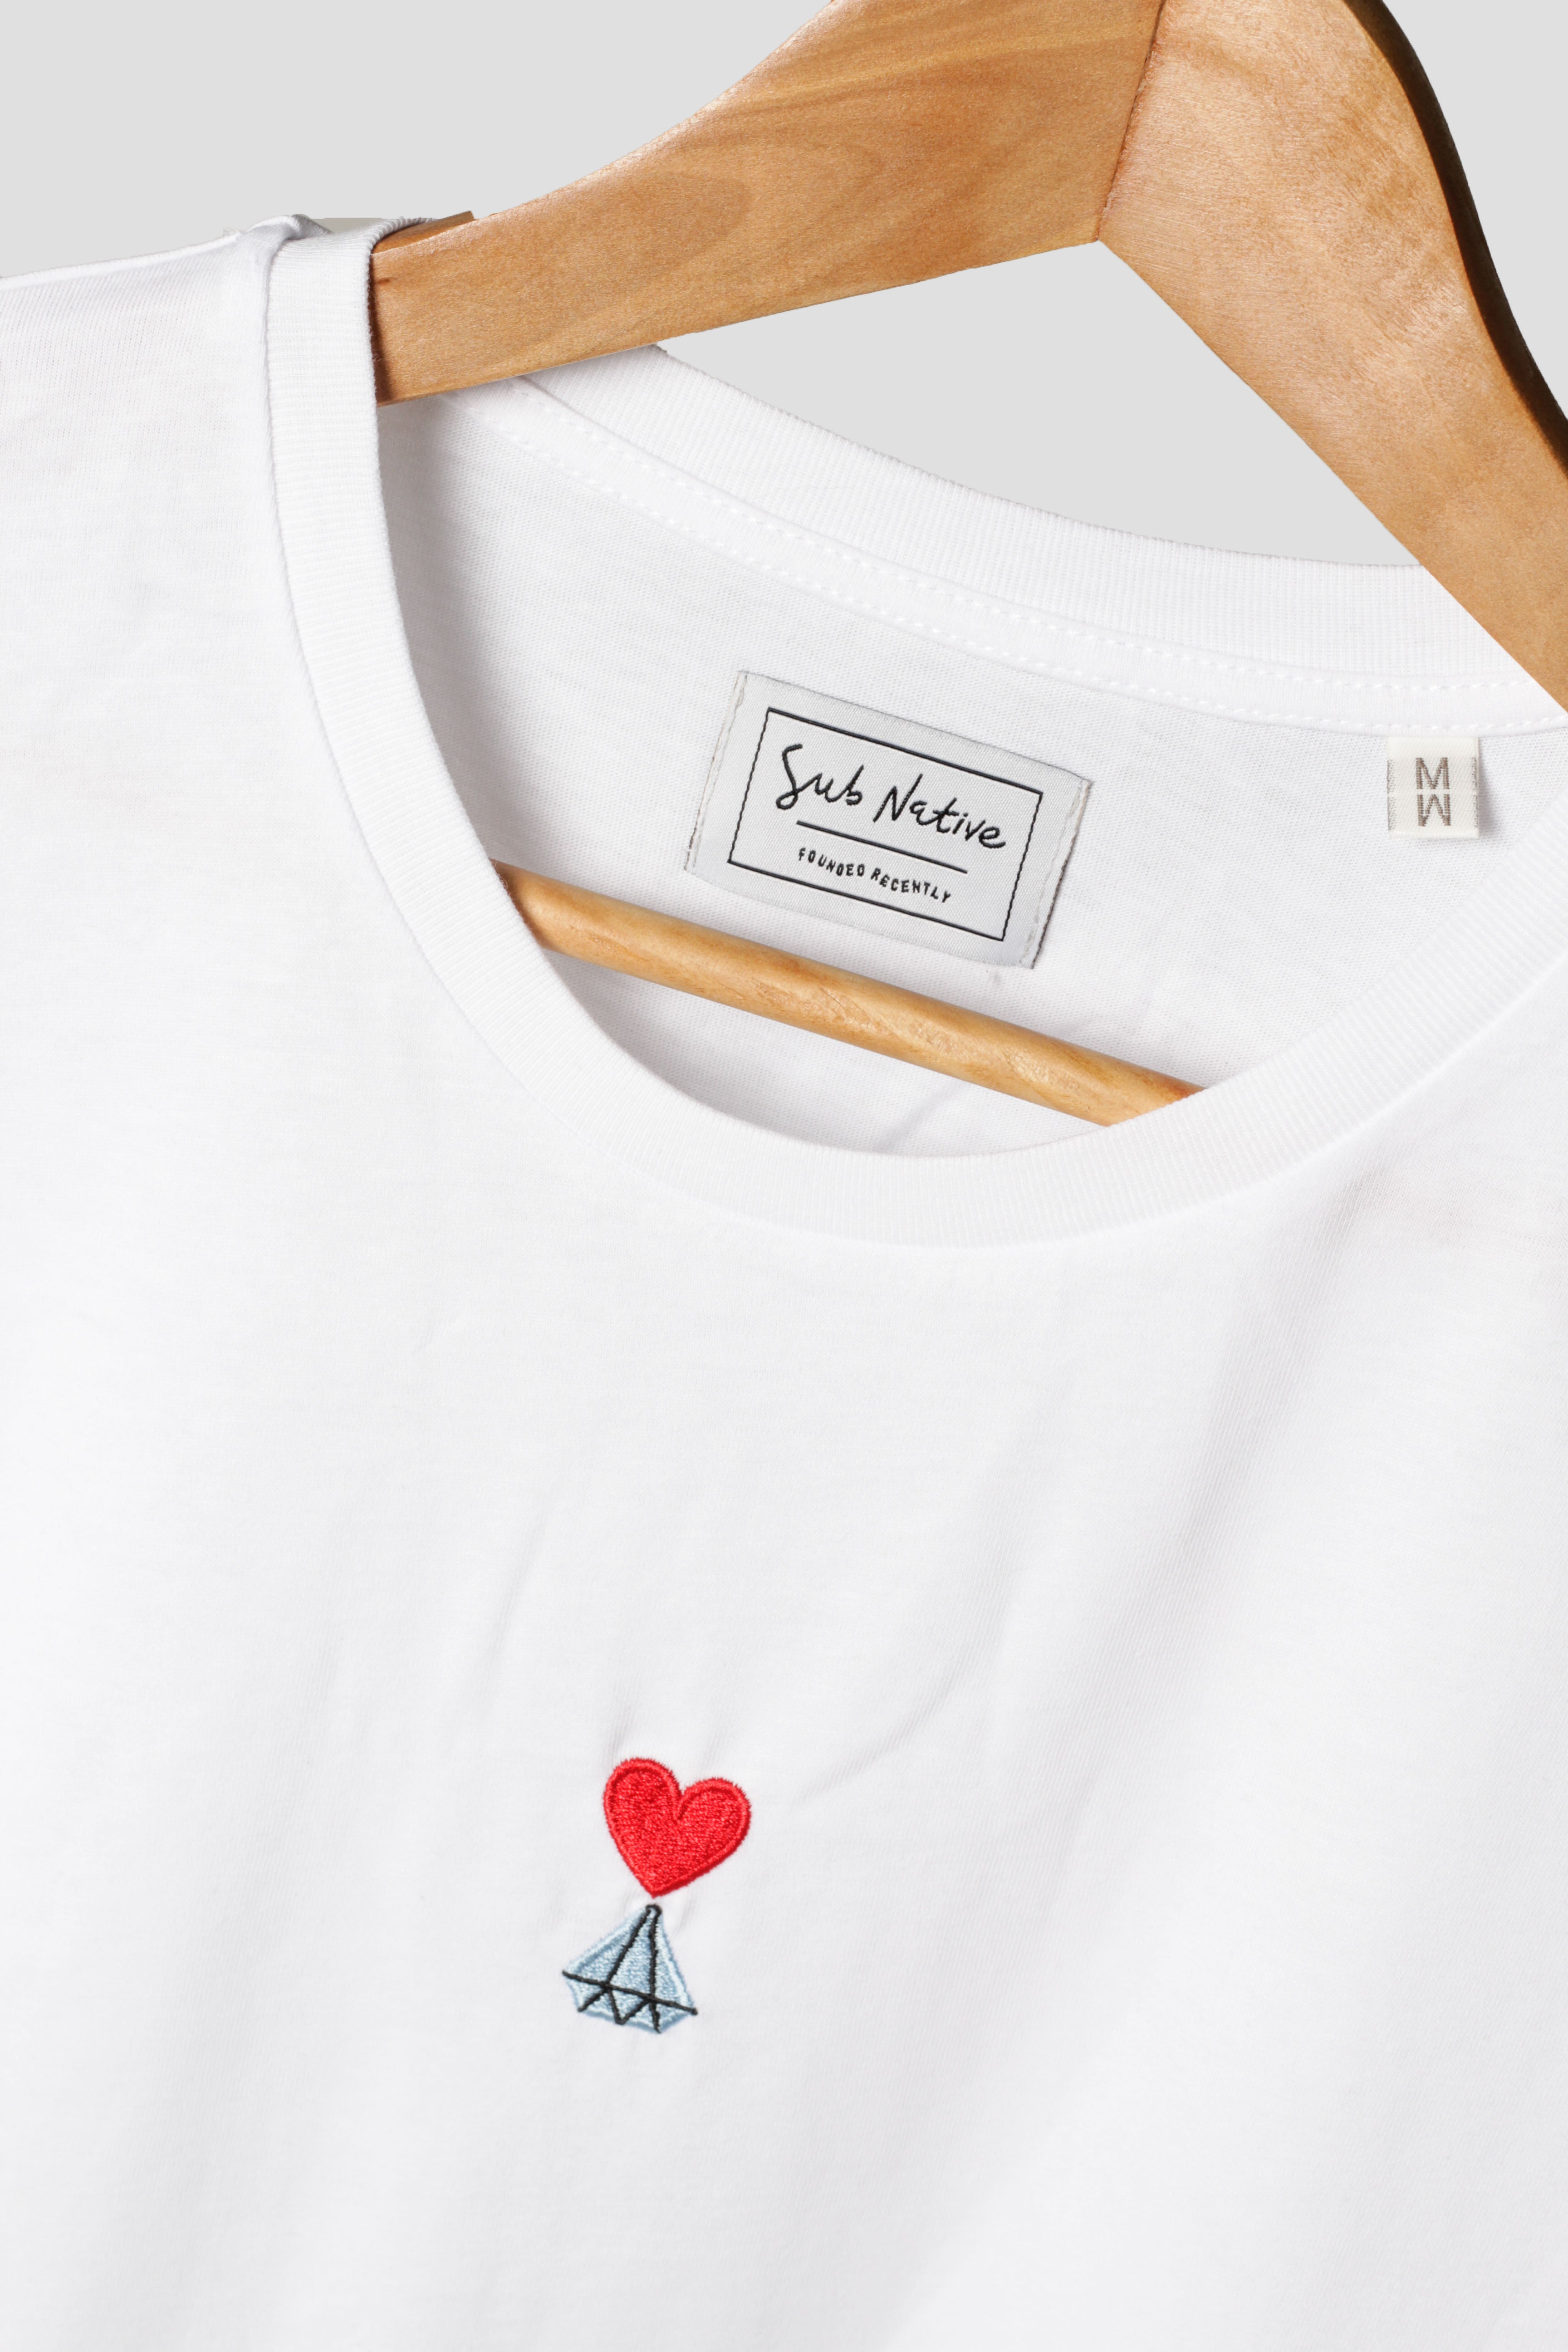 sub native hearts over diamonds embroidered t-shirt white